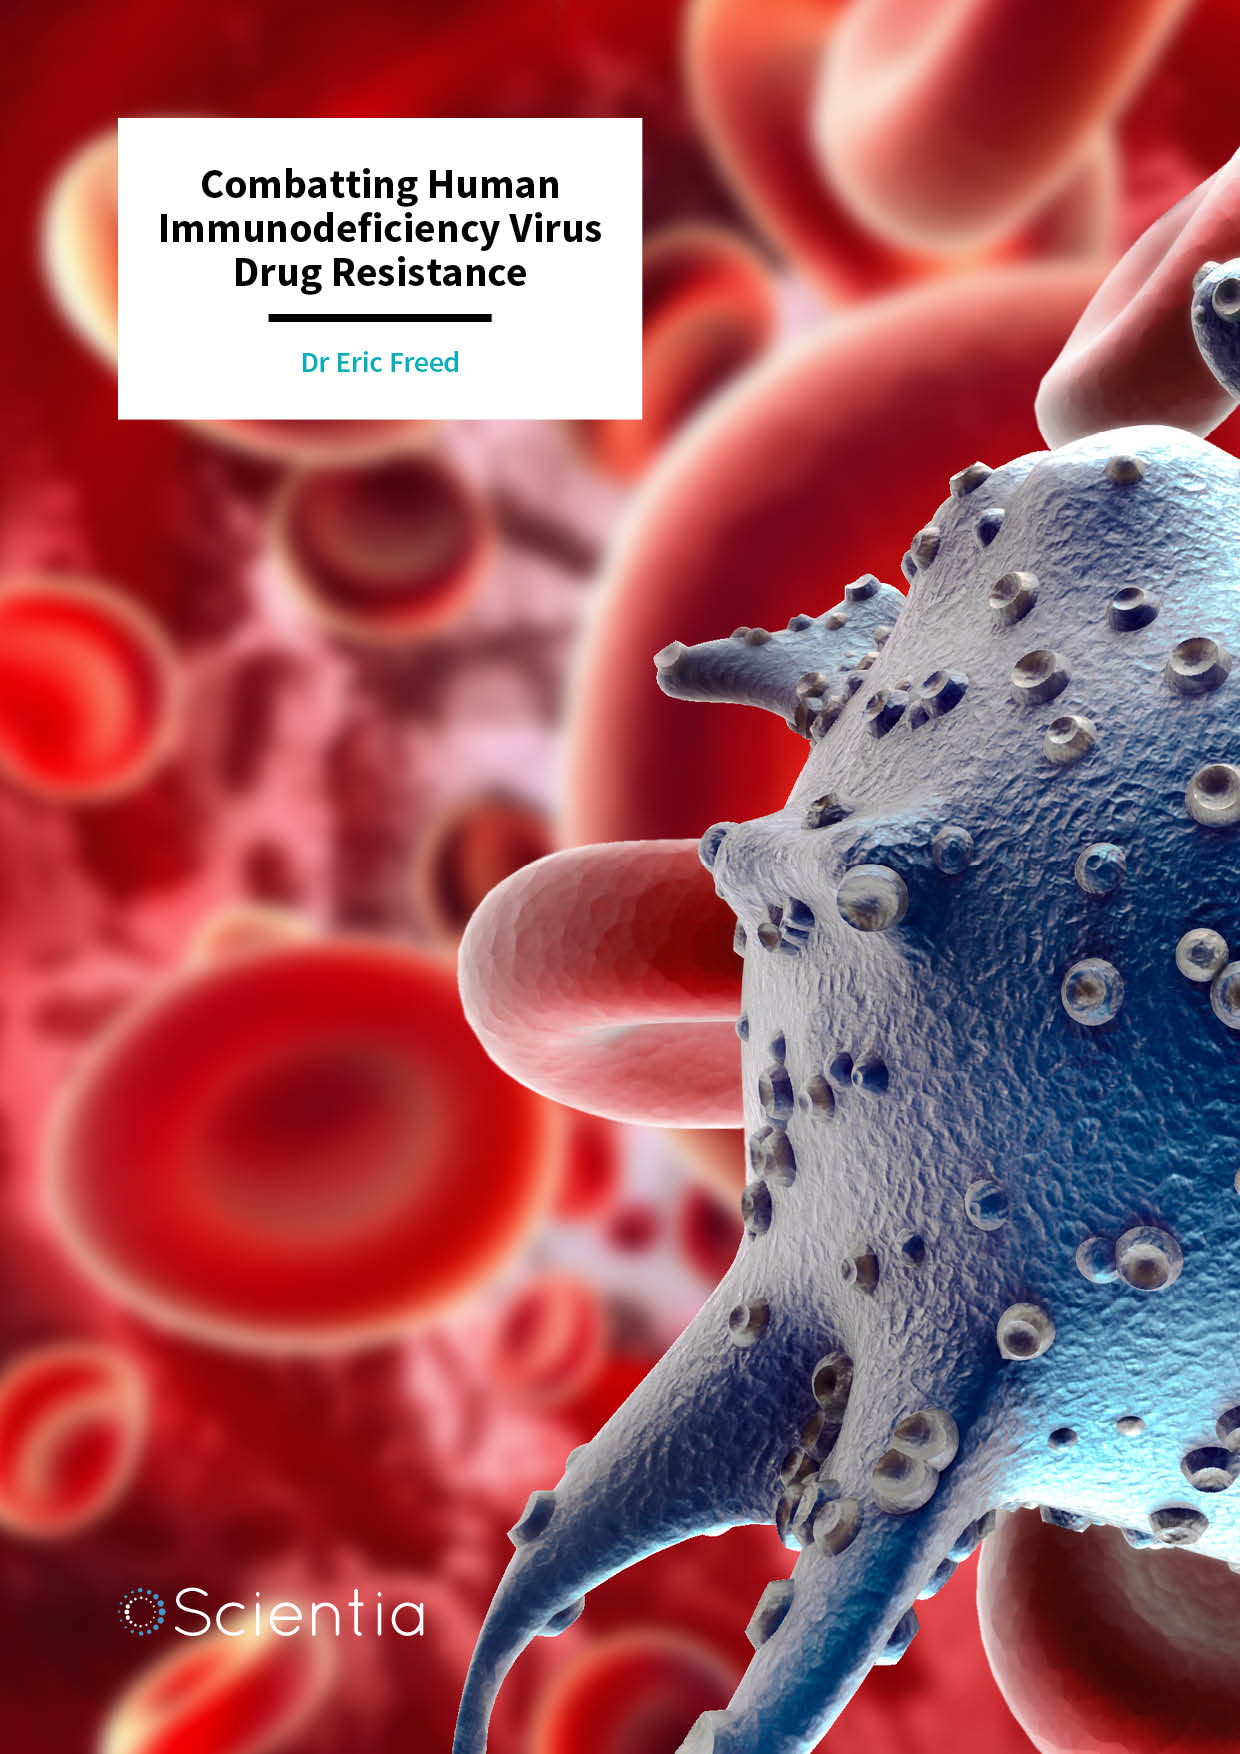 Dr Eric Freed – Combatting Human Immunodeficiency Virus Drug Resistance